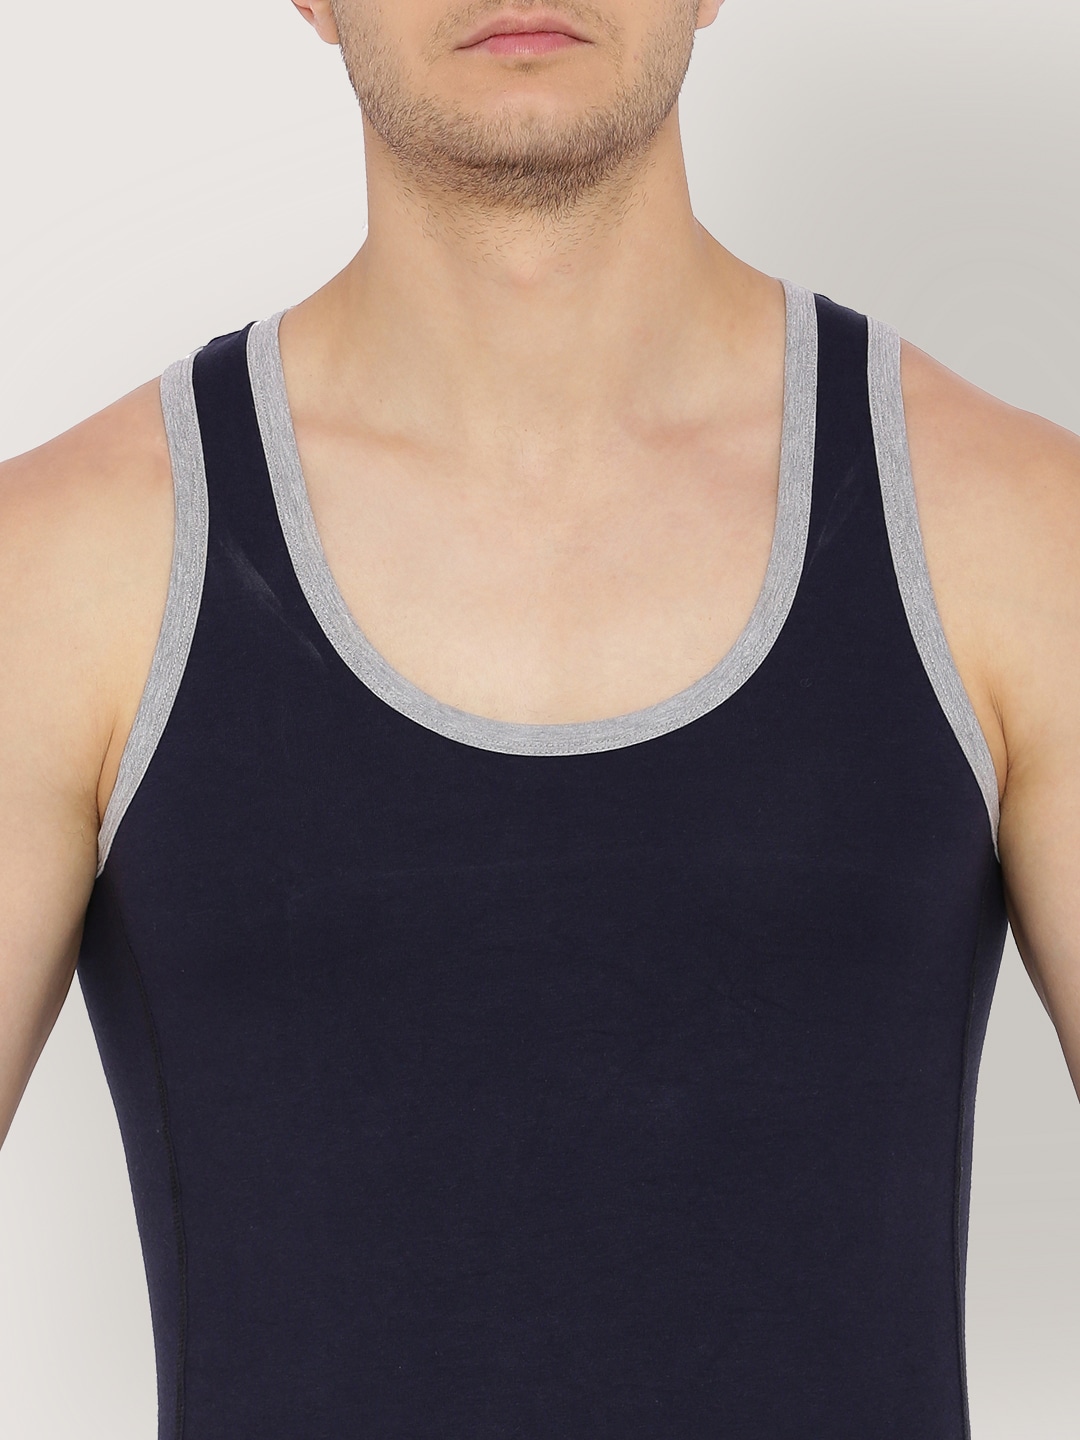 Clothing Innerwear Vests | Van Heusen Navy Blue Innerwear Vests 60071 - AX07679